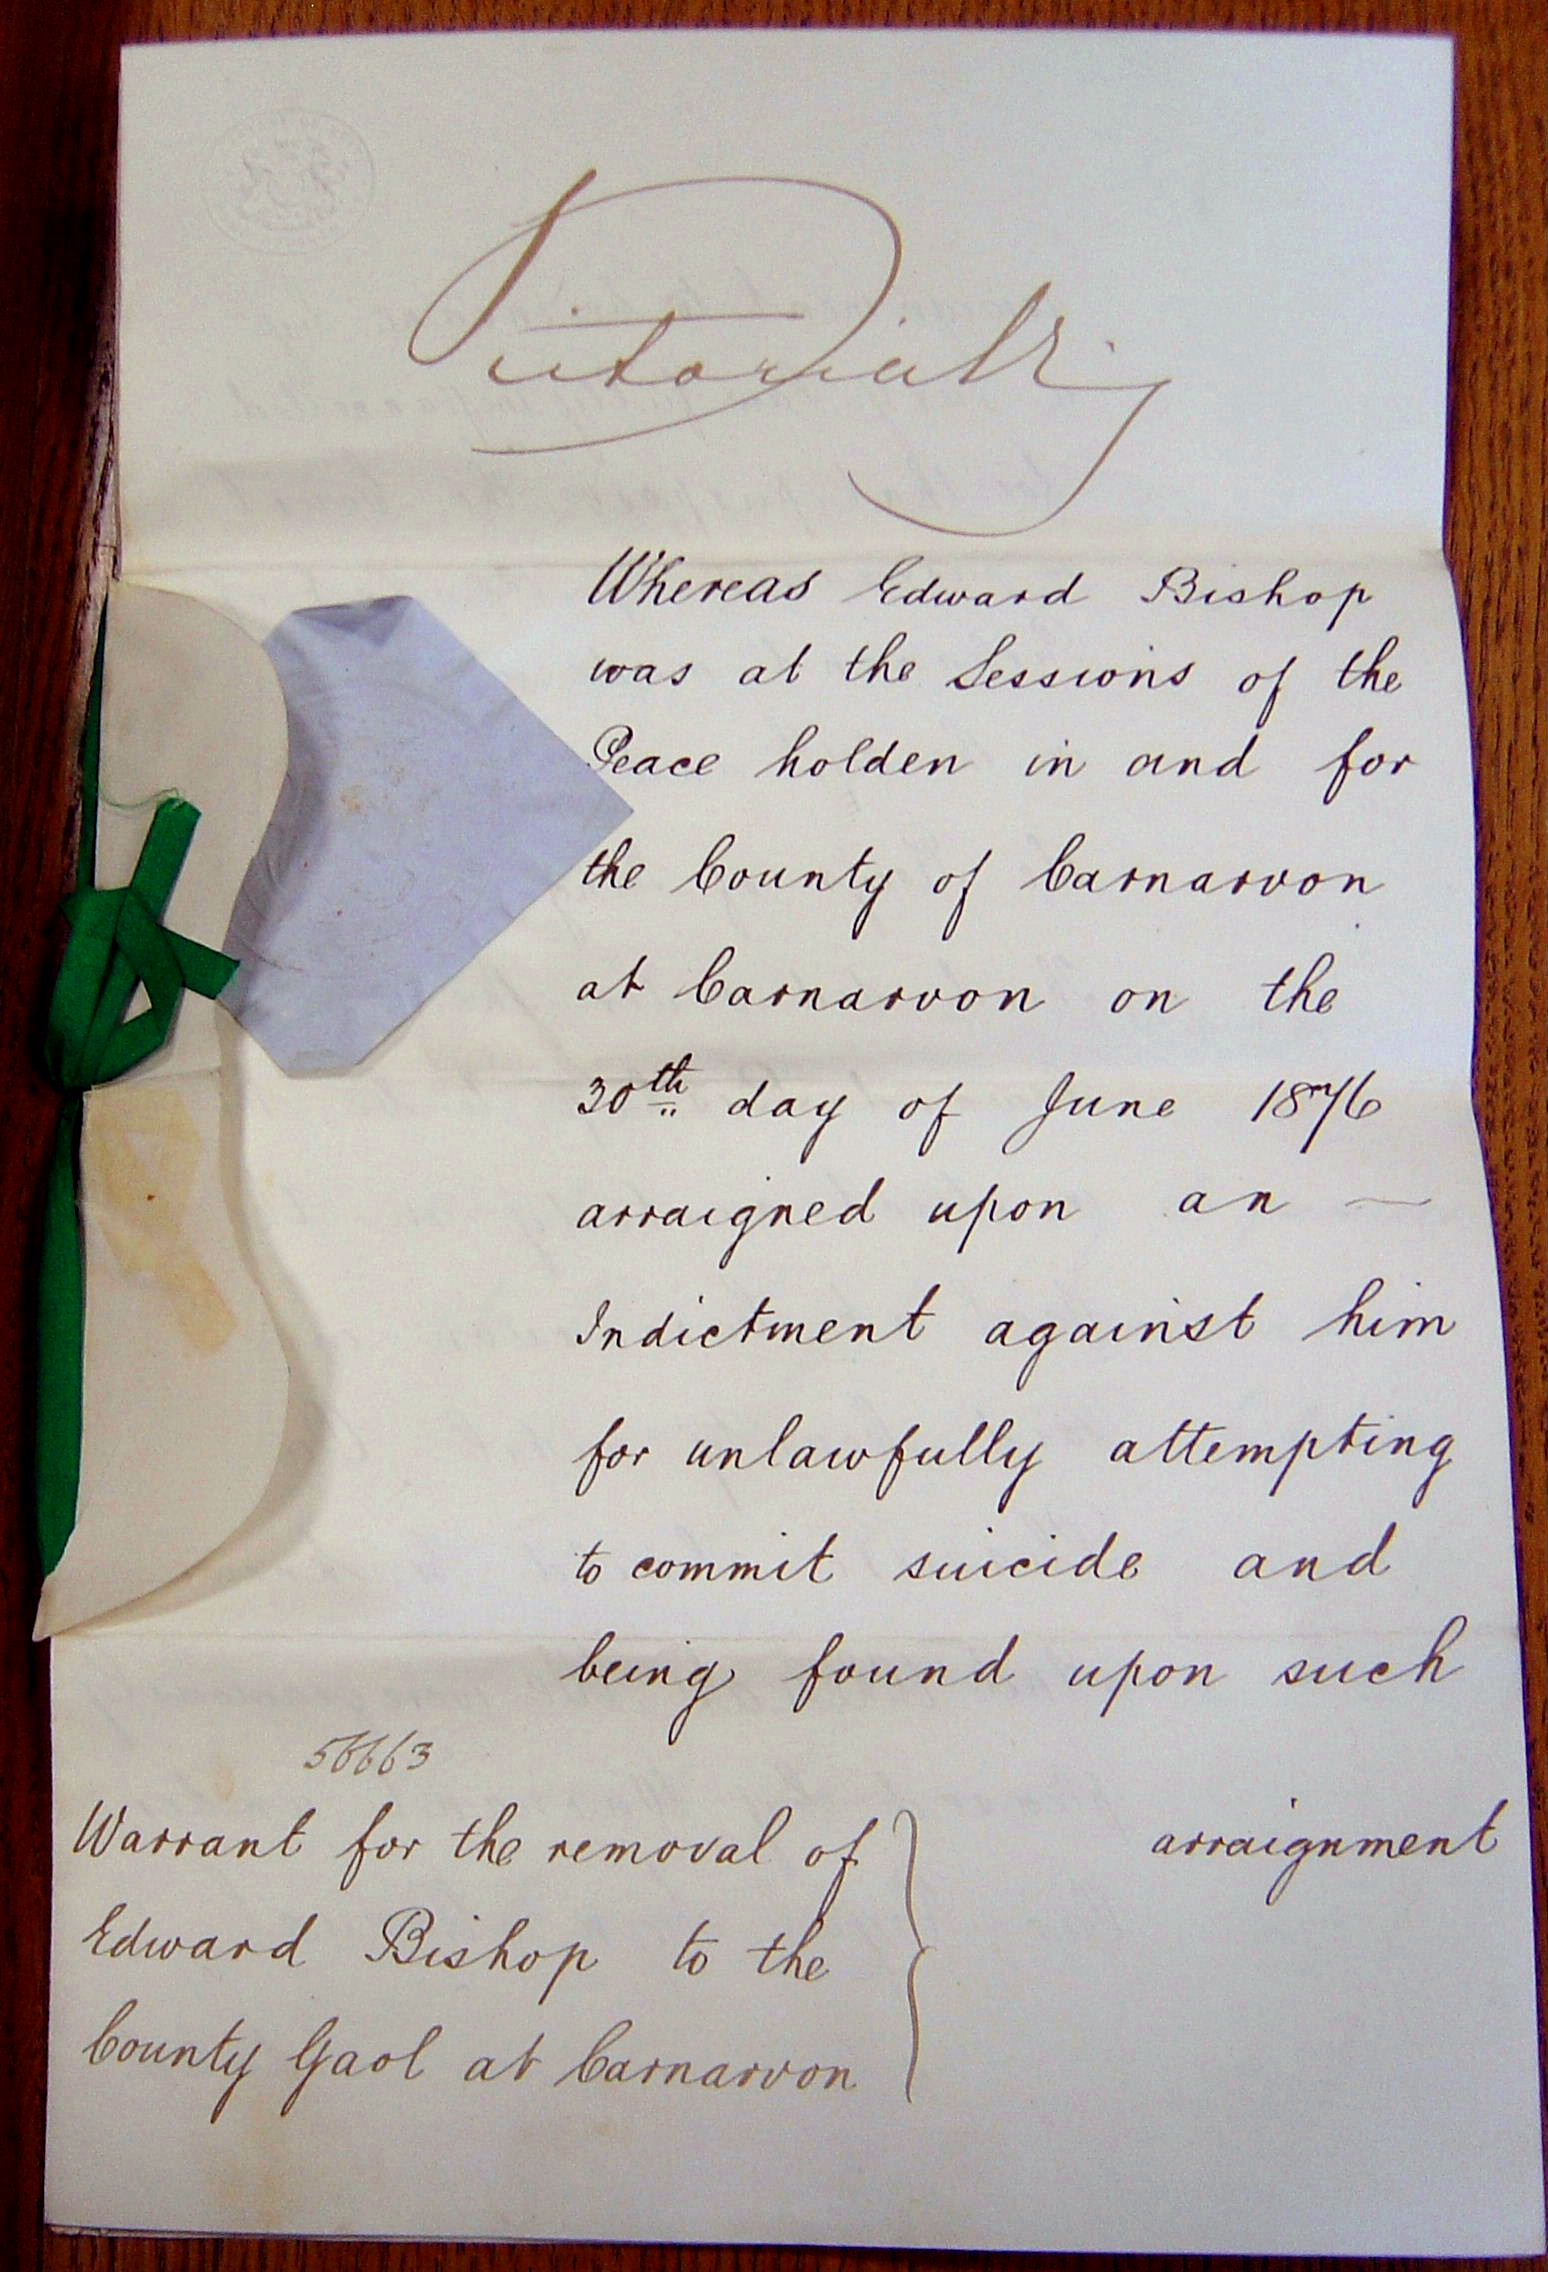 1875 Edward Bishop committal warrant 1876